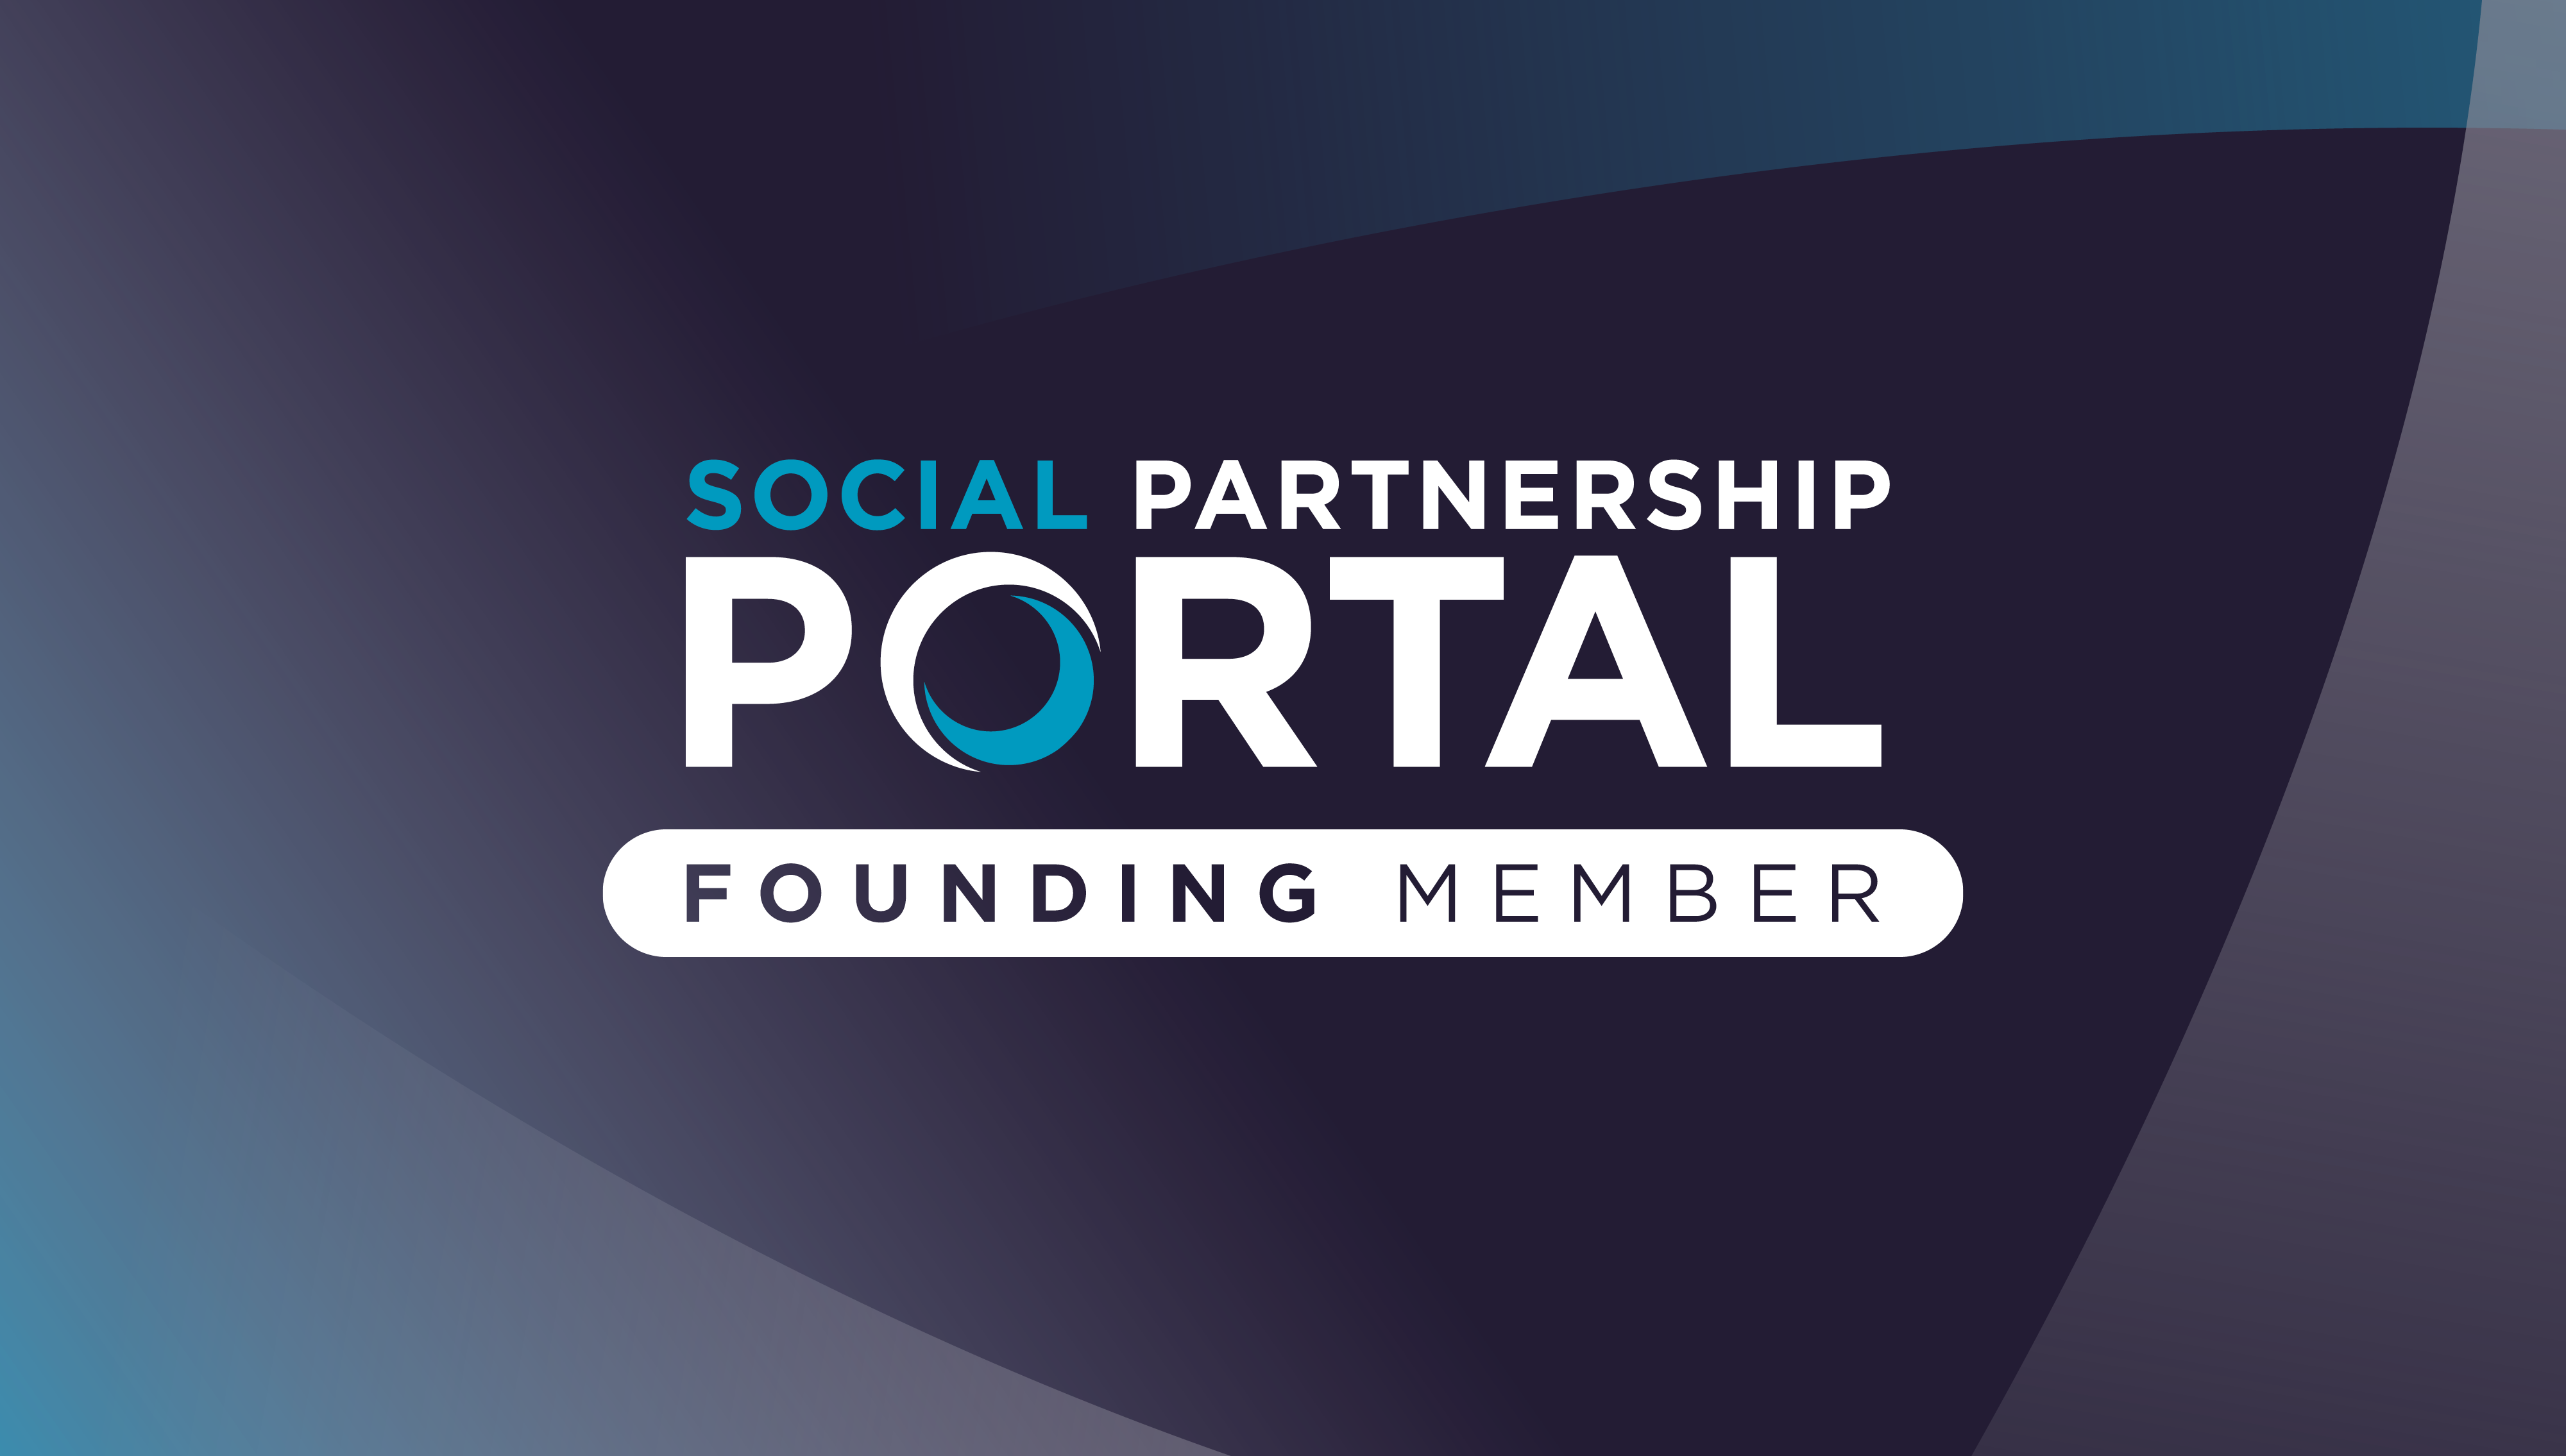 The Social Partnership Portal - Founding Member Social Media Graphic.png